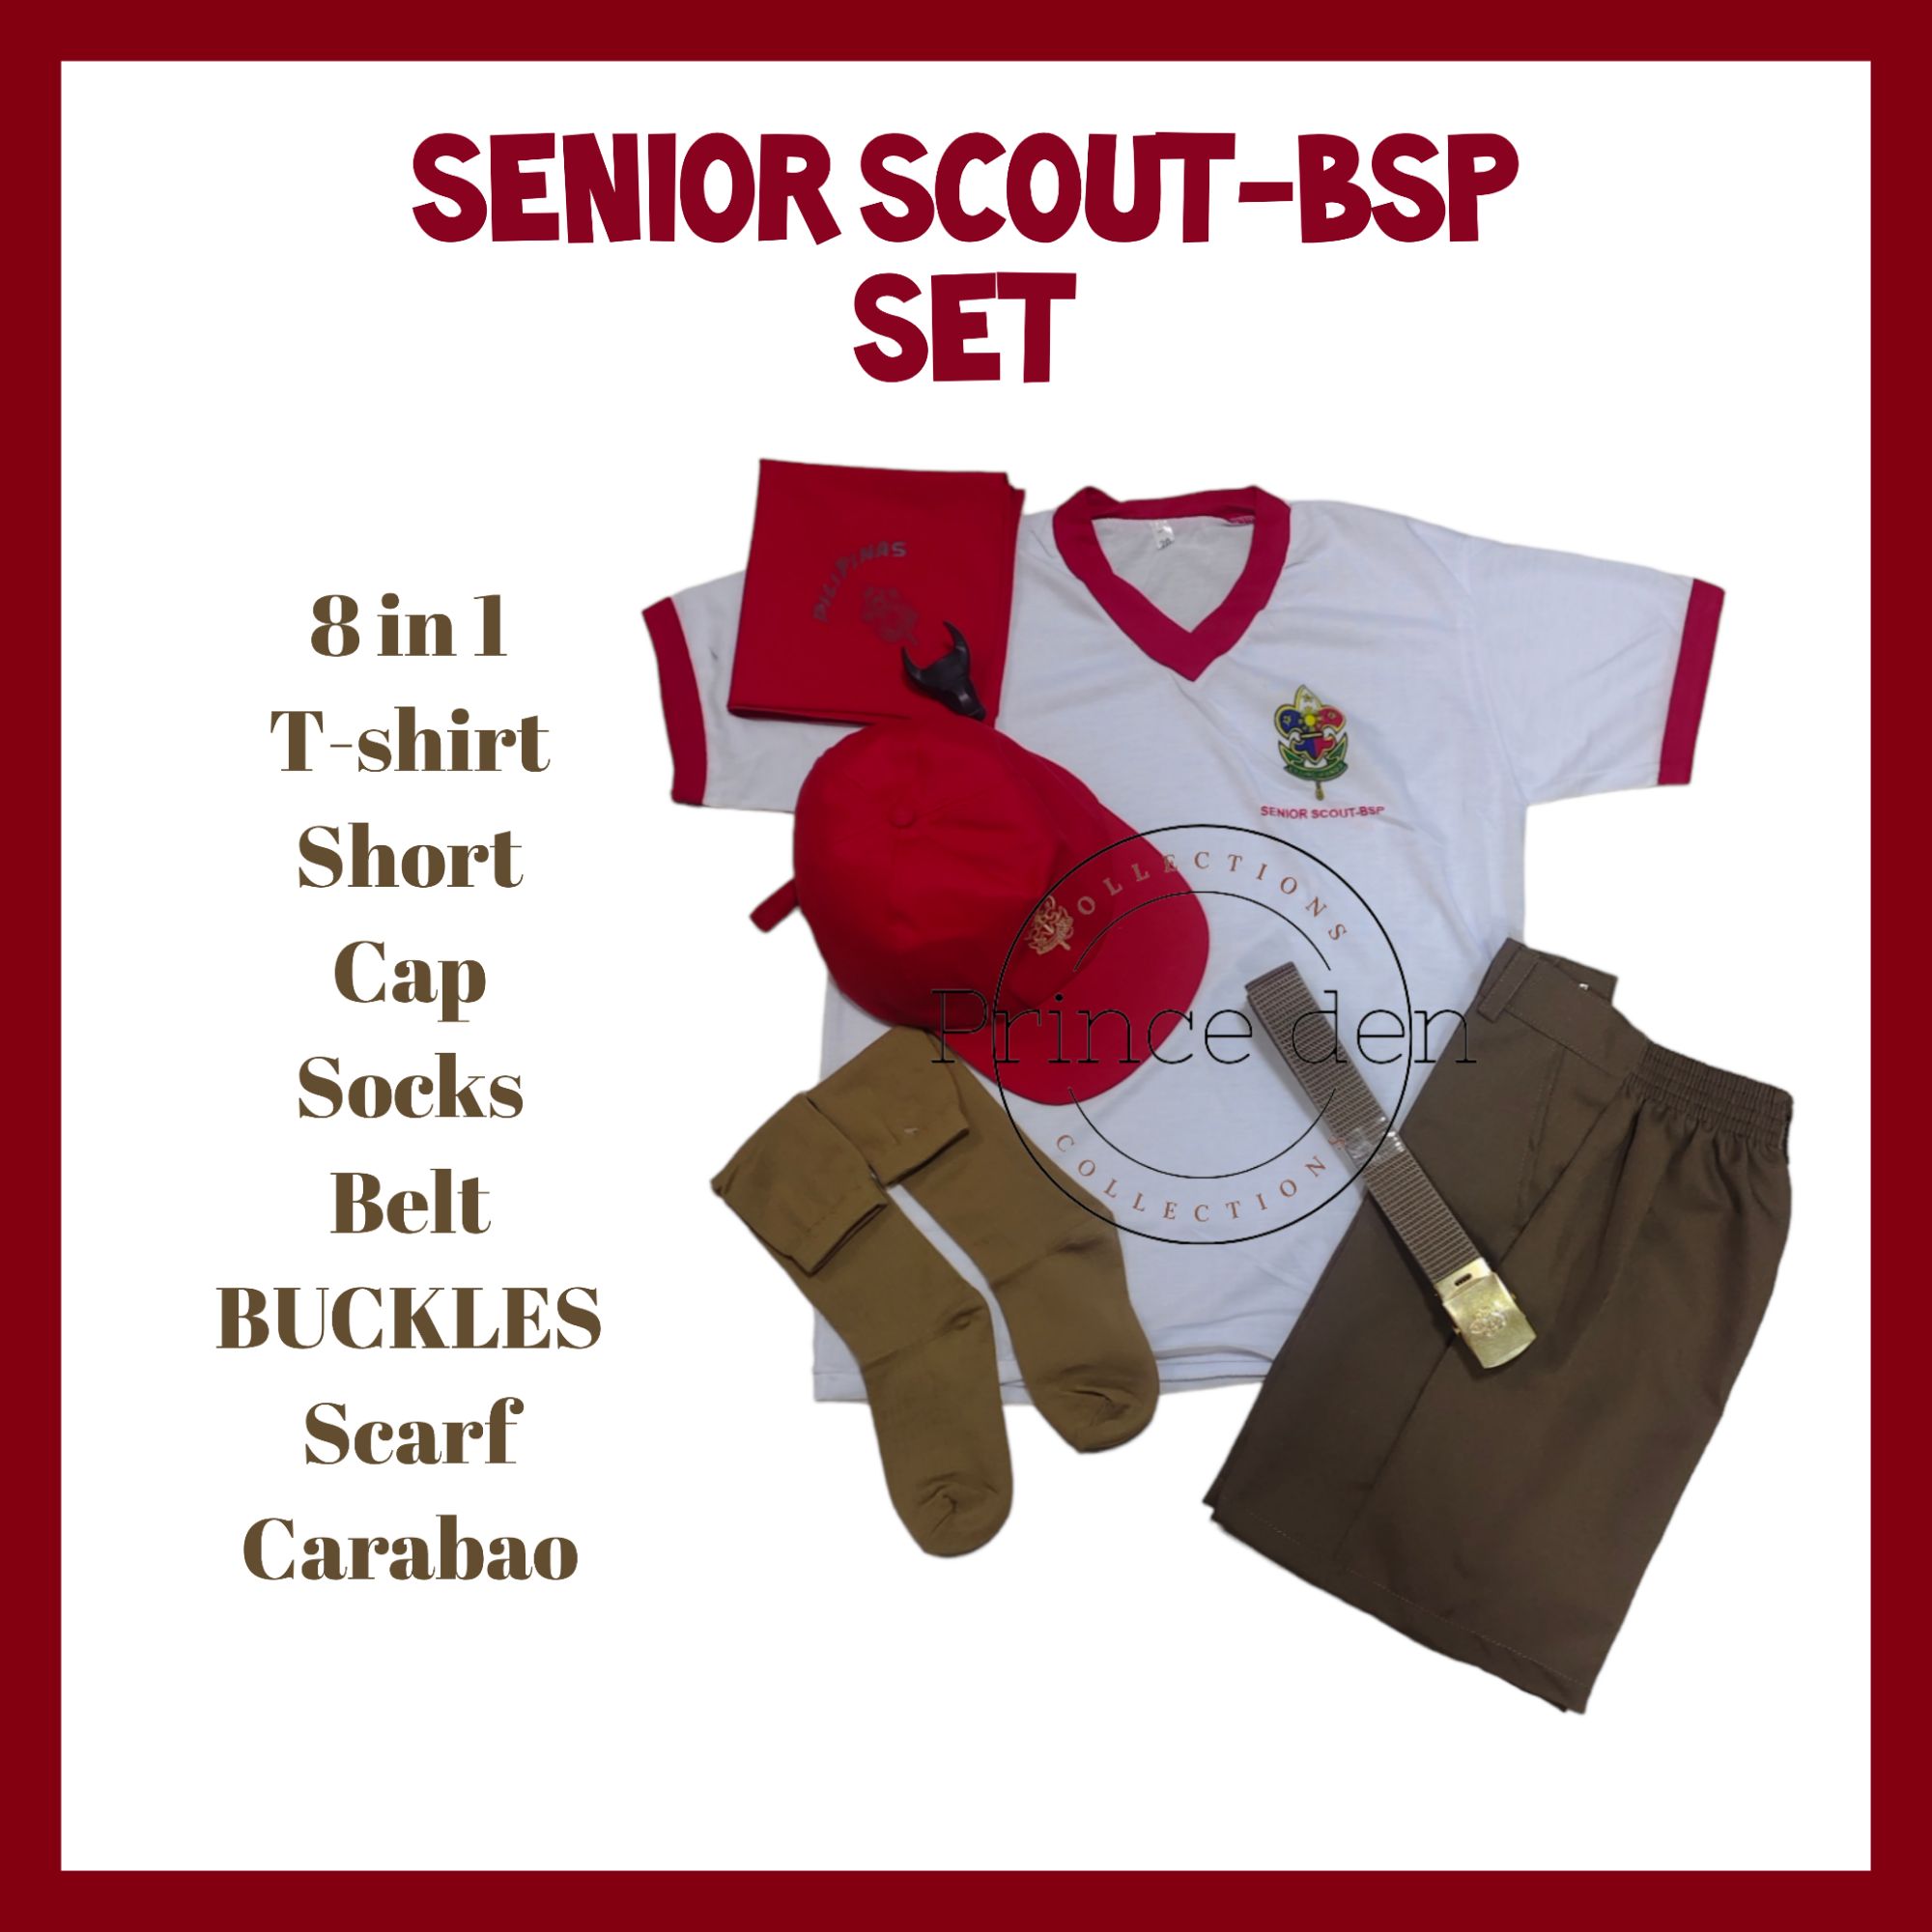 new-cod-8in1-senior-scout-uniform-set-bsp-lazada-ph